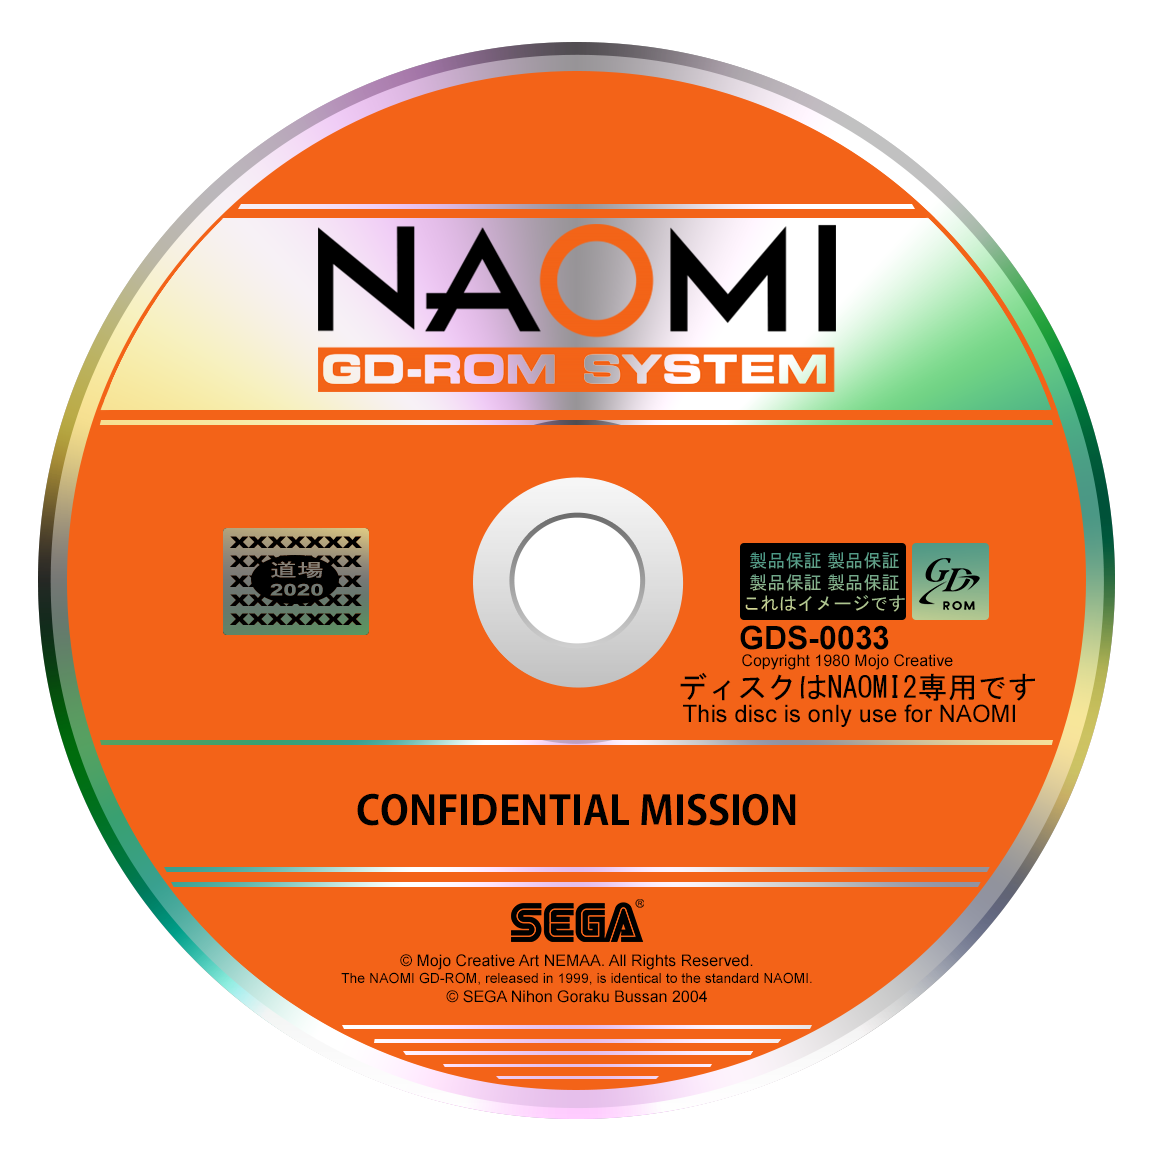 Sega Naomi GD-ROM (CDs) Set - Sega Naomi - LaunchBox Community Forums